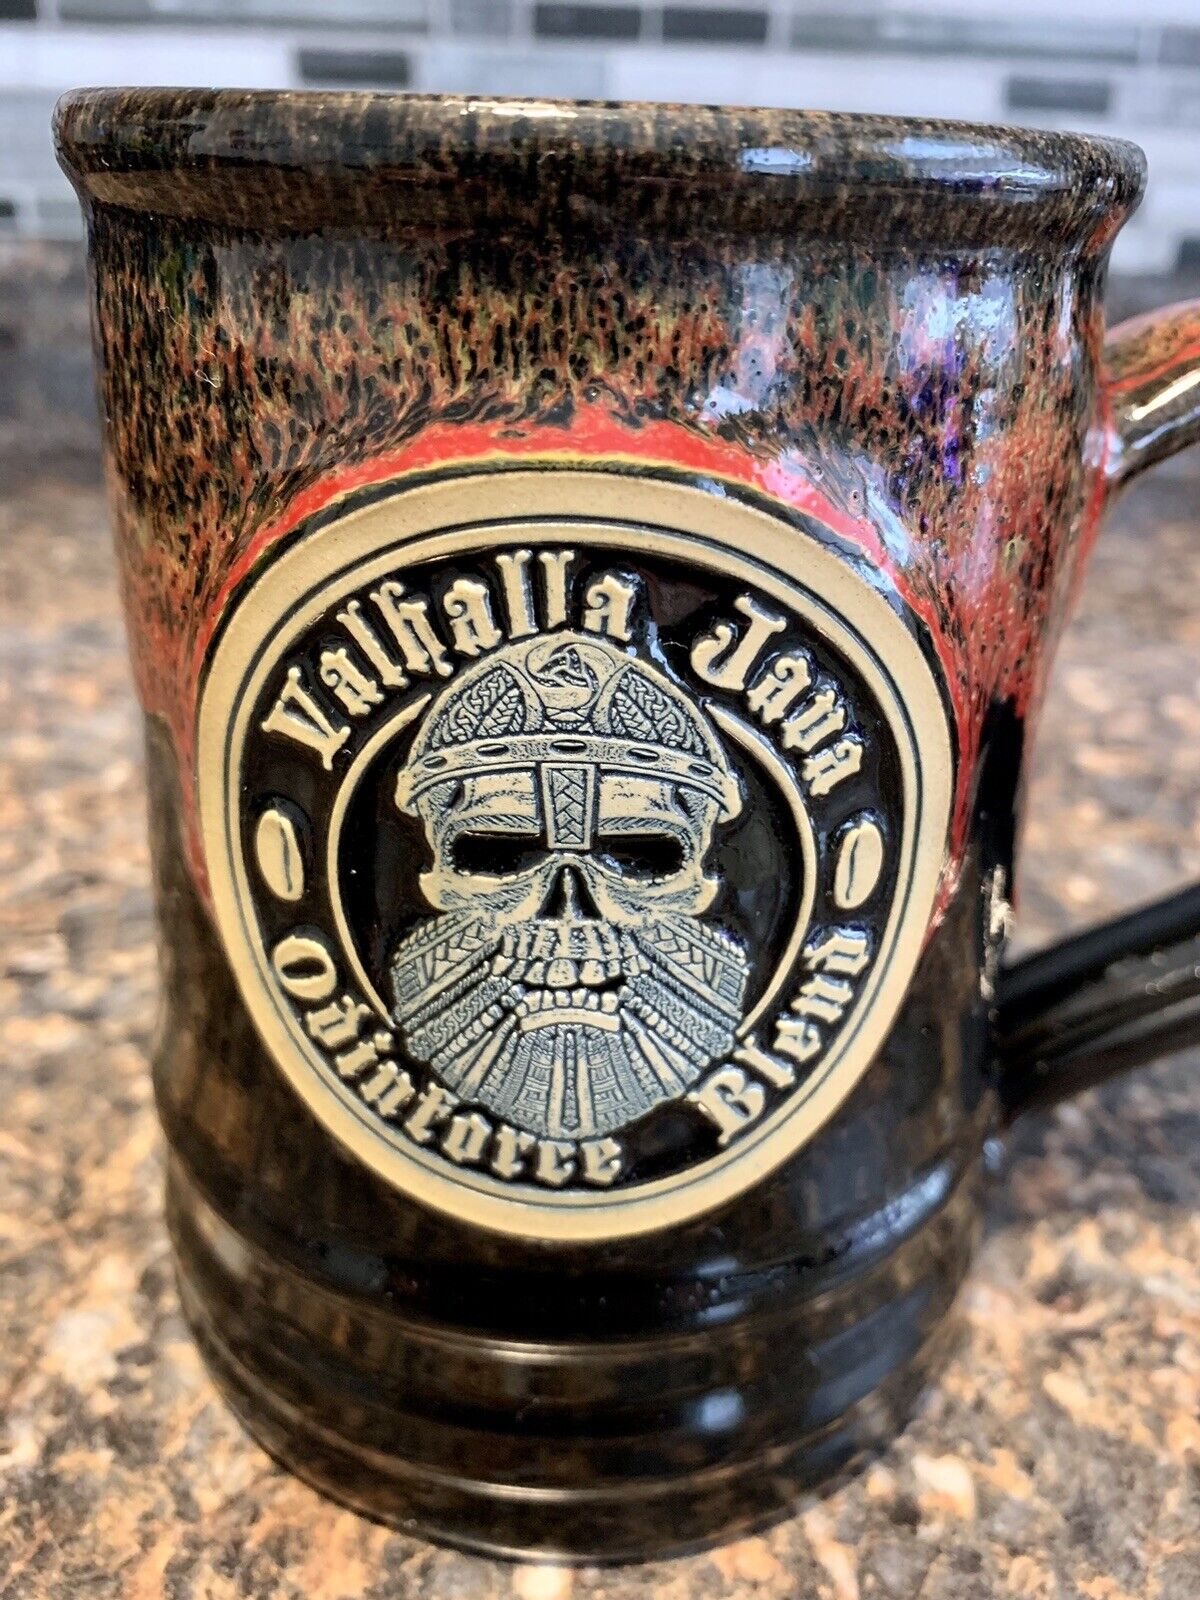 Death Wish Coffee Valhalla Java Odinforce Blend Coffee Mug Deneen Pottery 2018